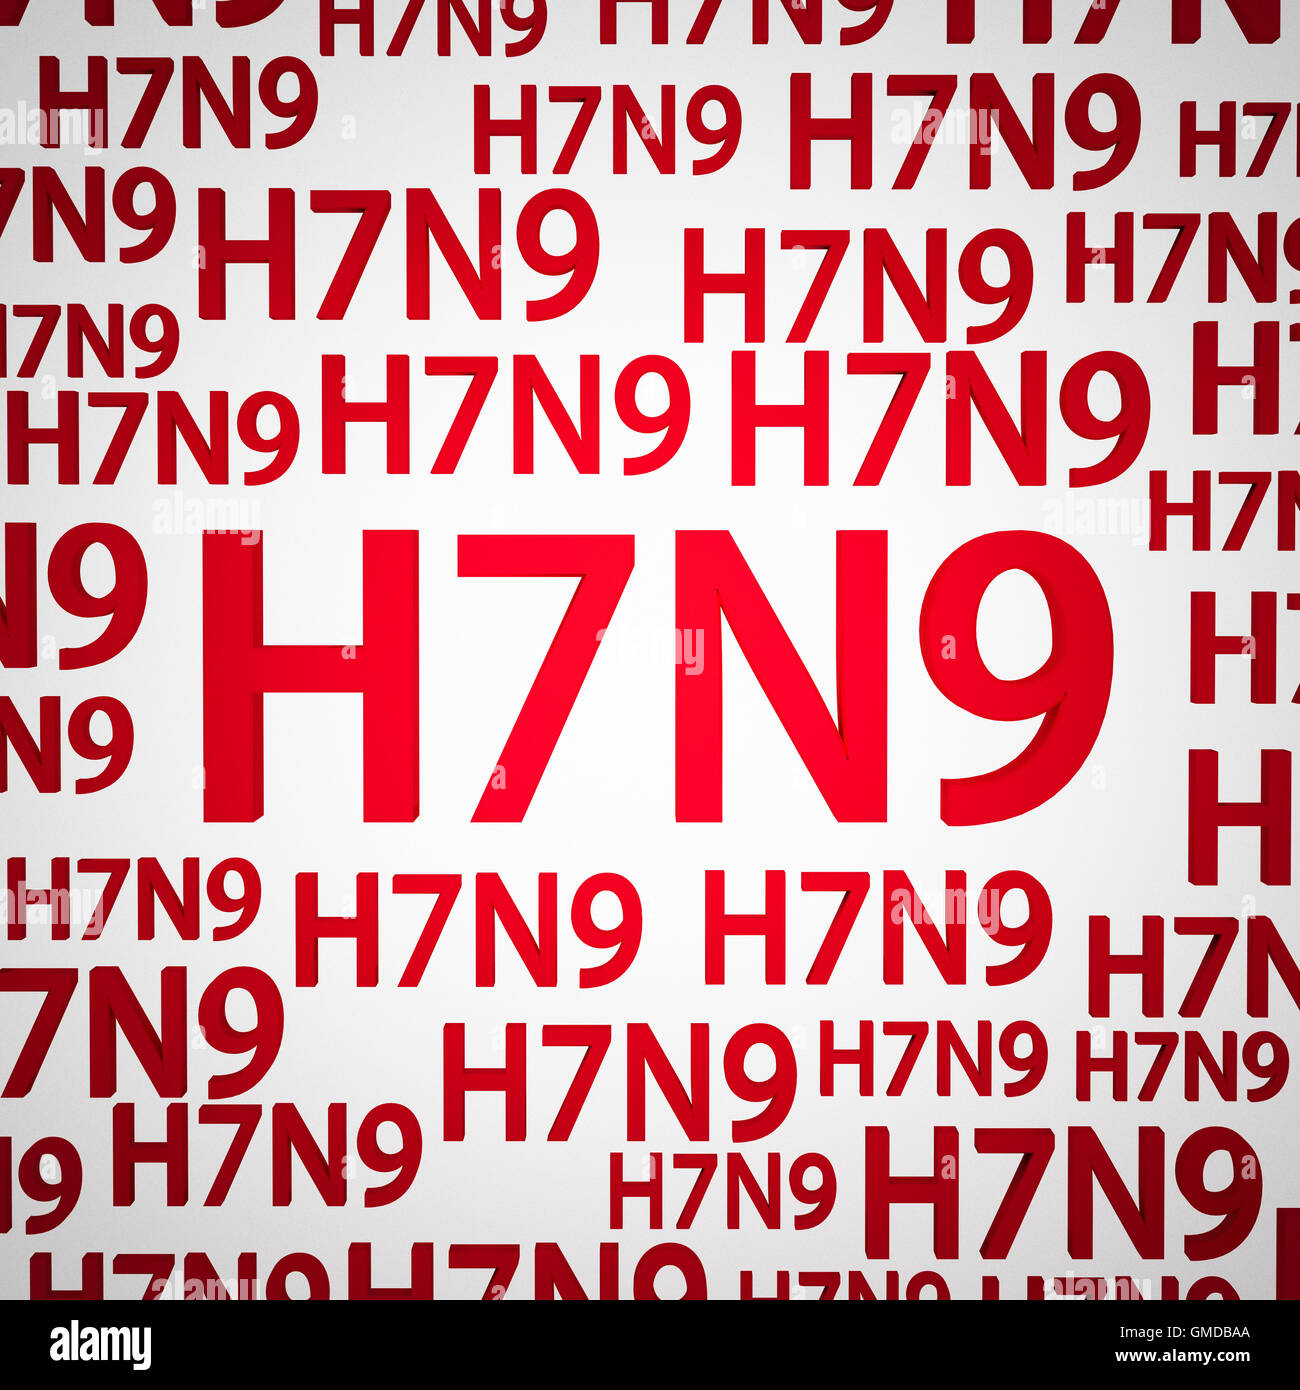 H7N9 flu or influenza virus Stock Photo